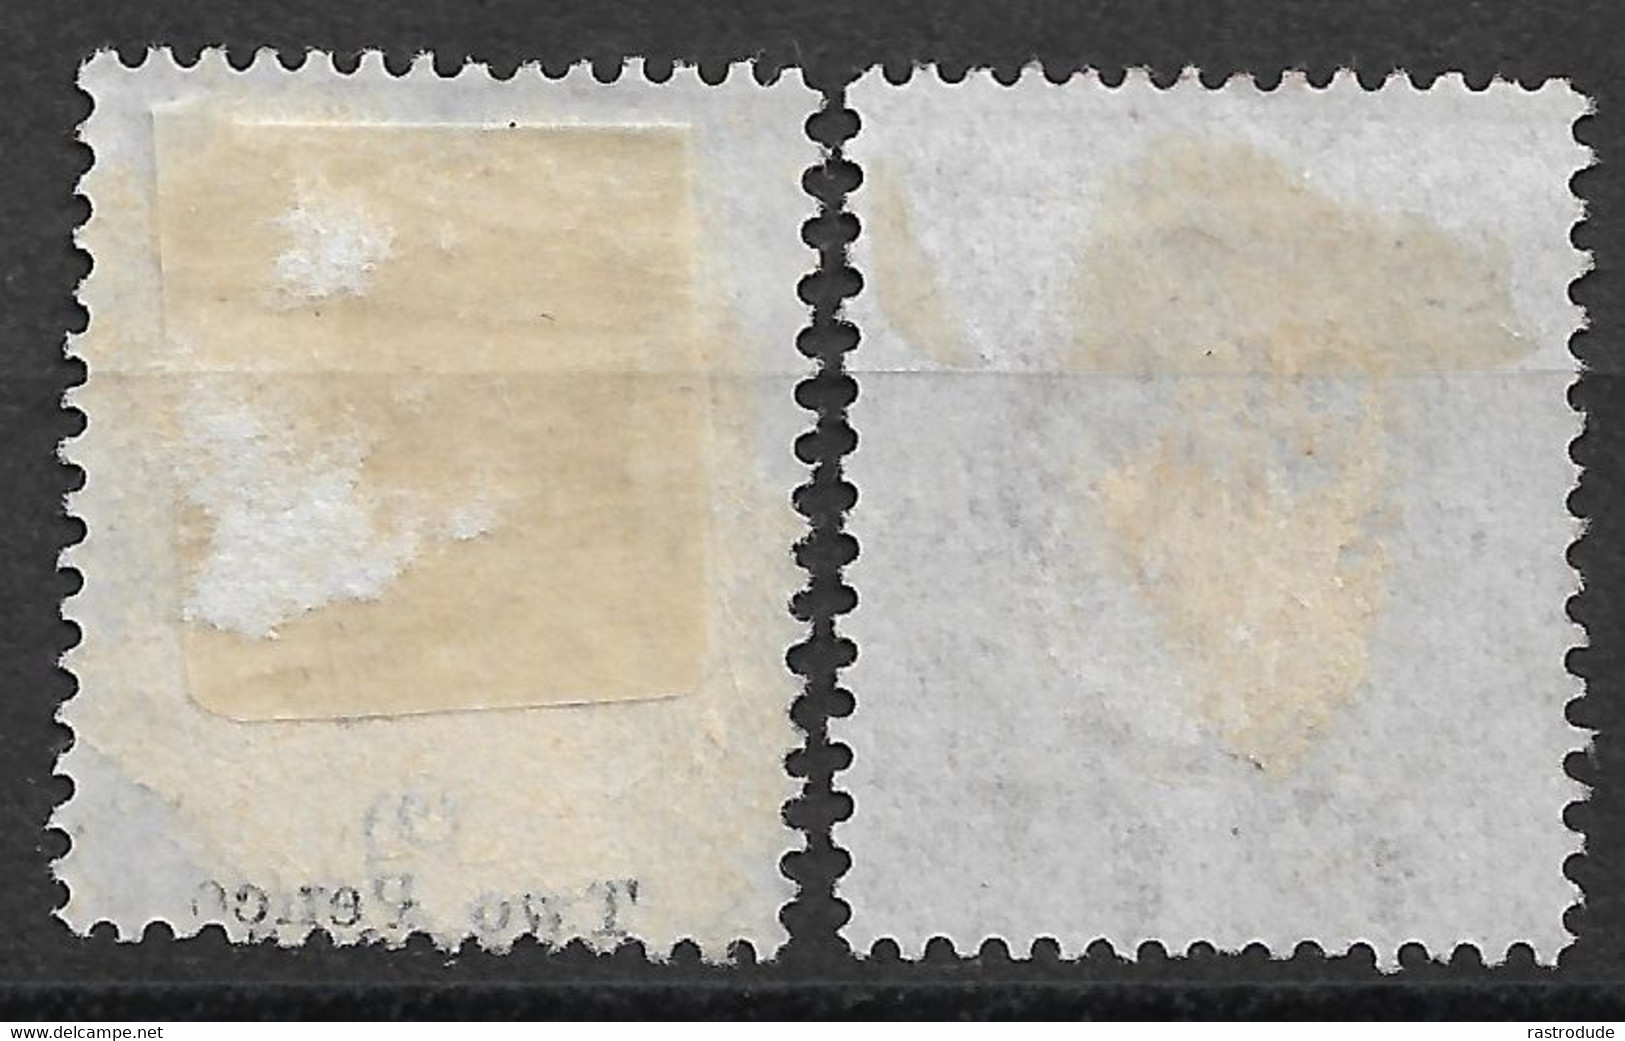 1863-72 MAURITIUS - 2d,4d SG. 59, 62 - CANCELLED Overprint. - UNUSED - Mauritius (...-1967)